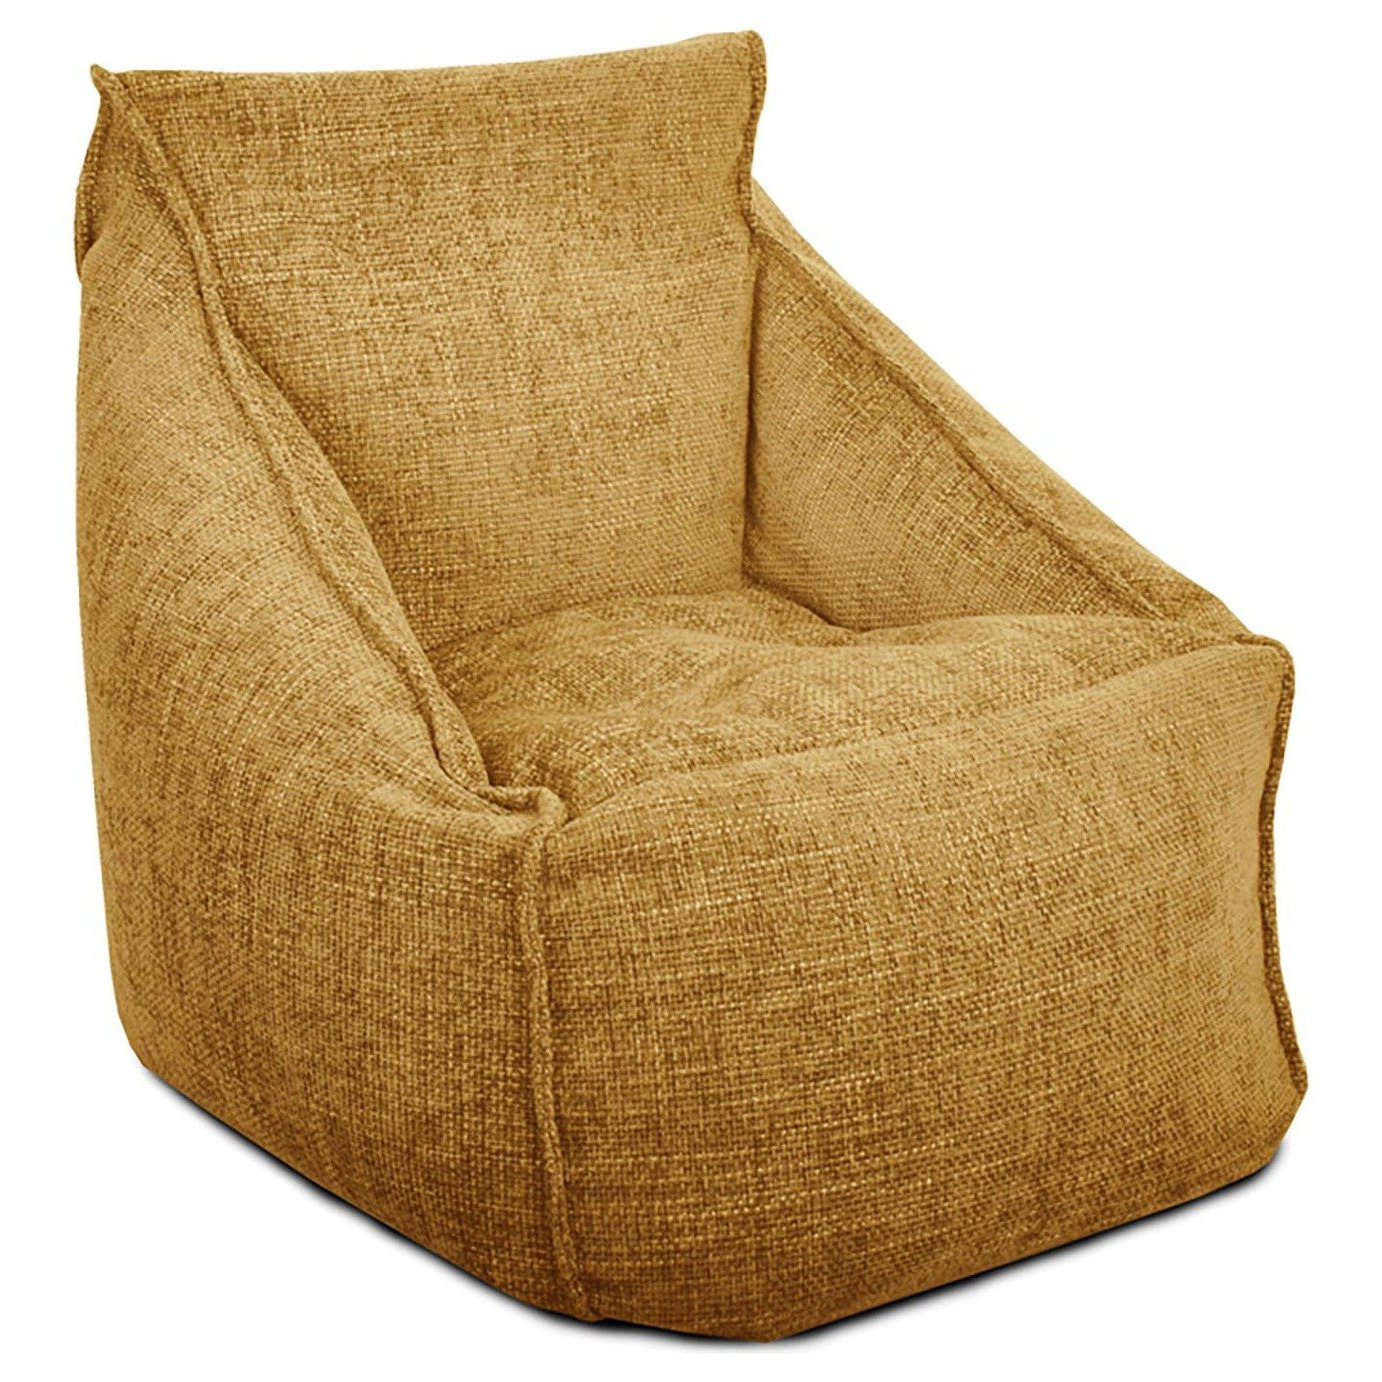 rucomfy Fabric Bean Bag Chair - Mustard - image 1